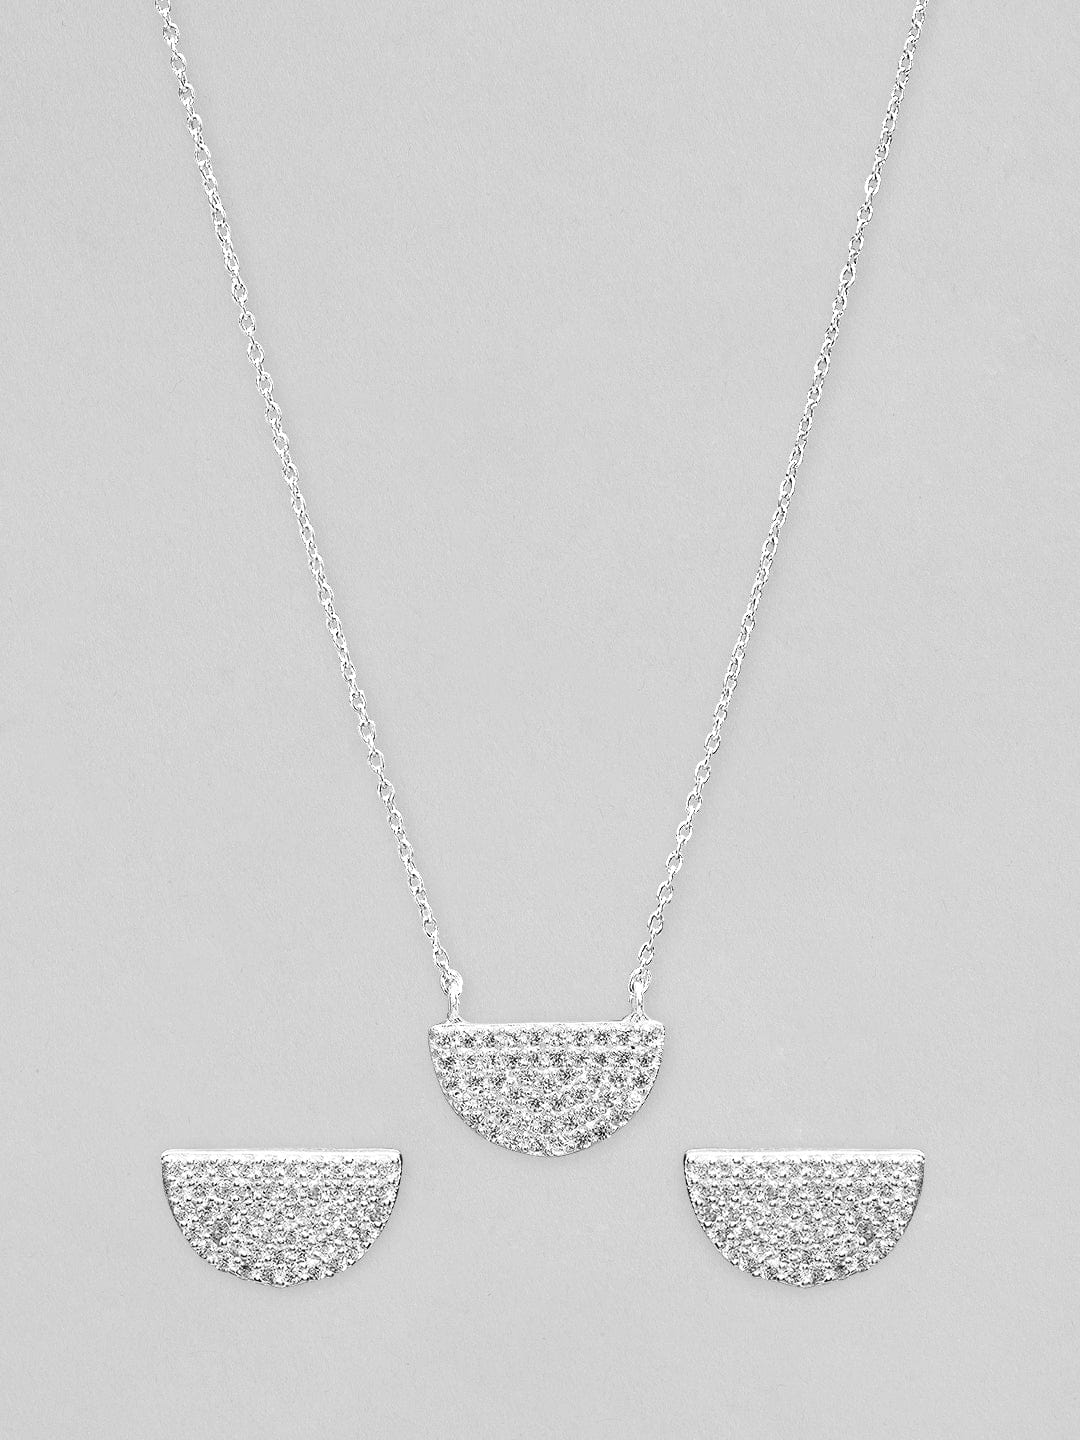 Rubans 925 Silver The Studded Half Circle Pendant Necklace. Necklace Set